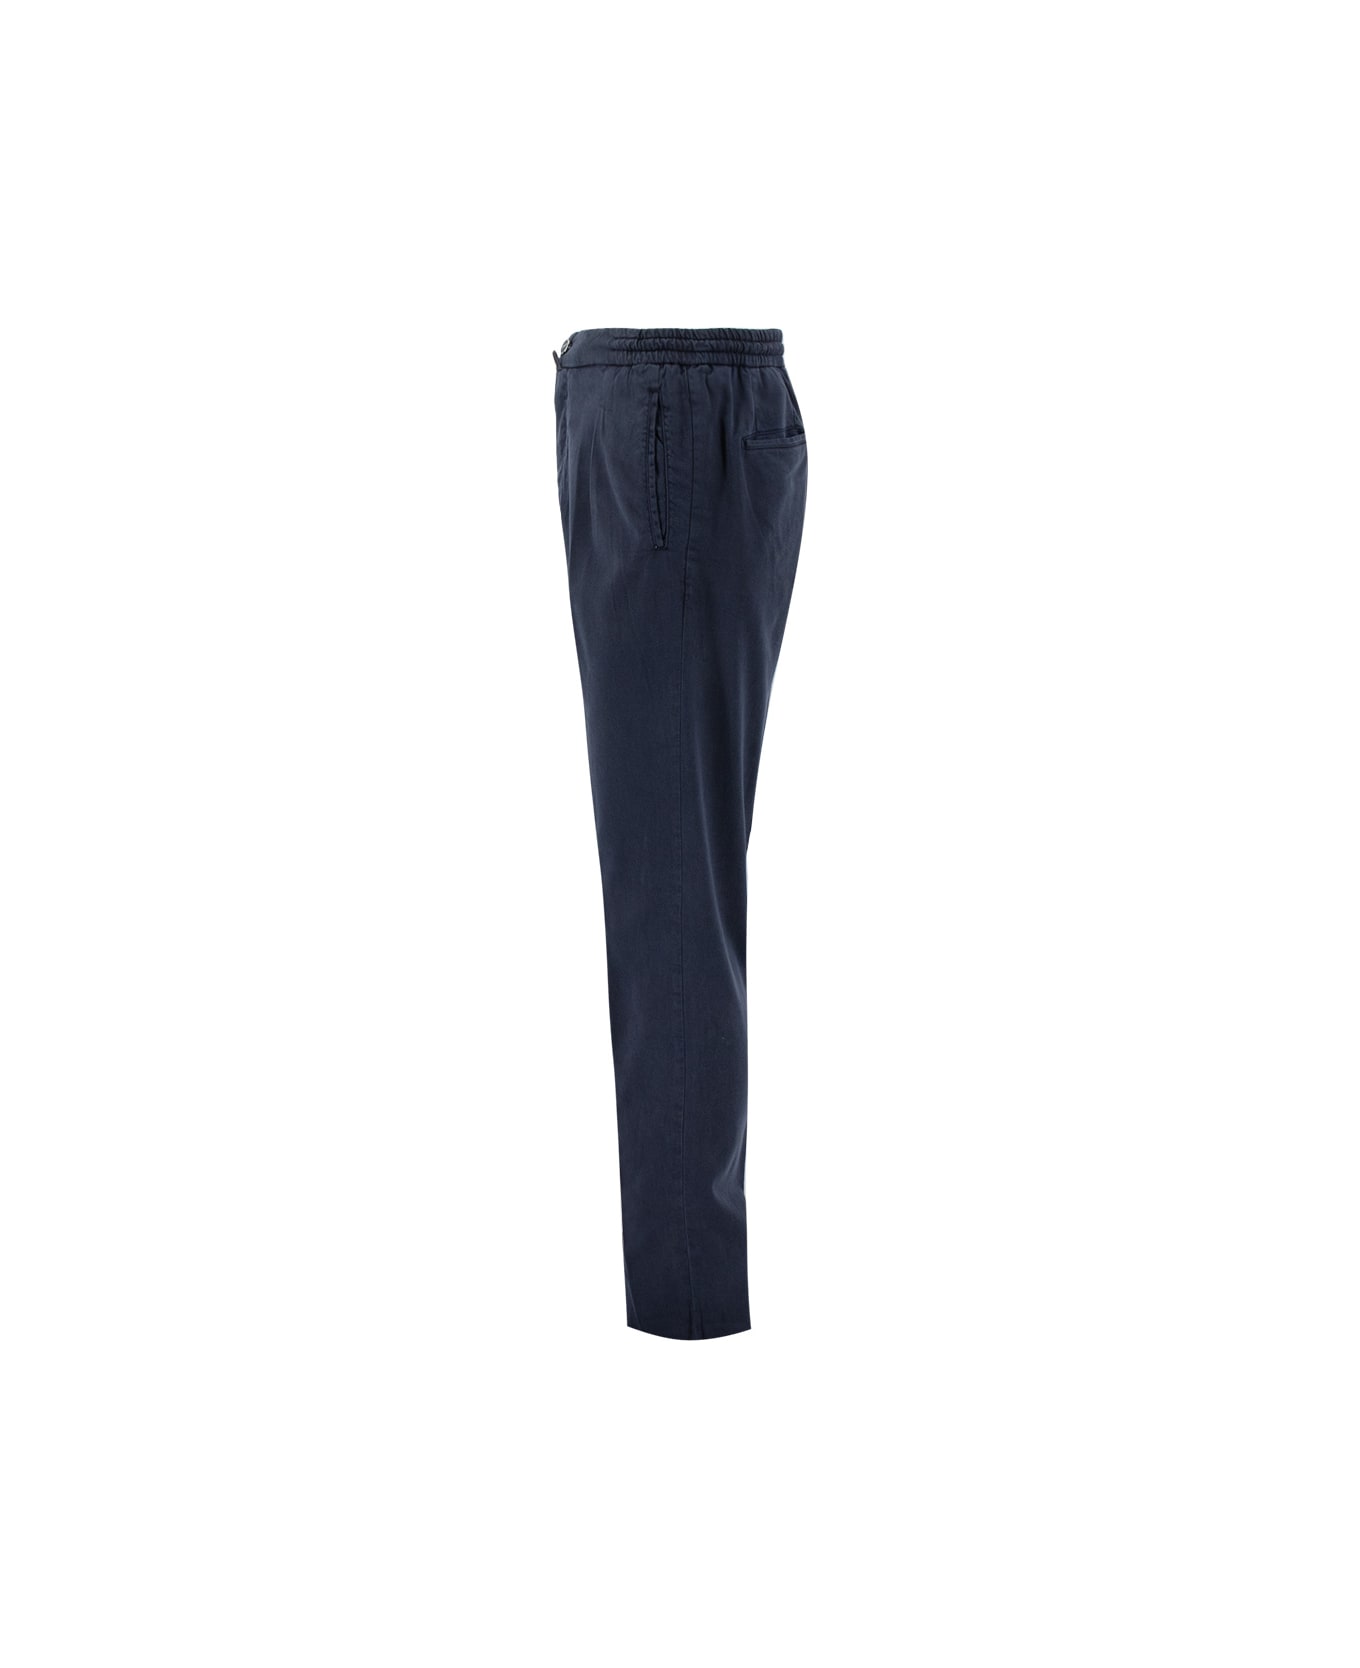 Kiton Trousers Norwich - NAVY BLUE